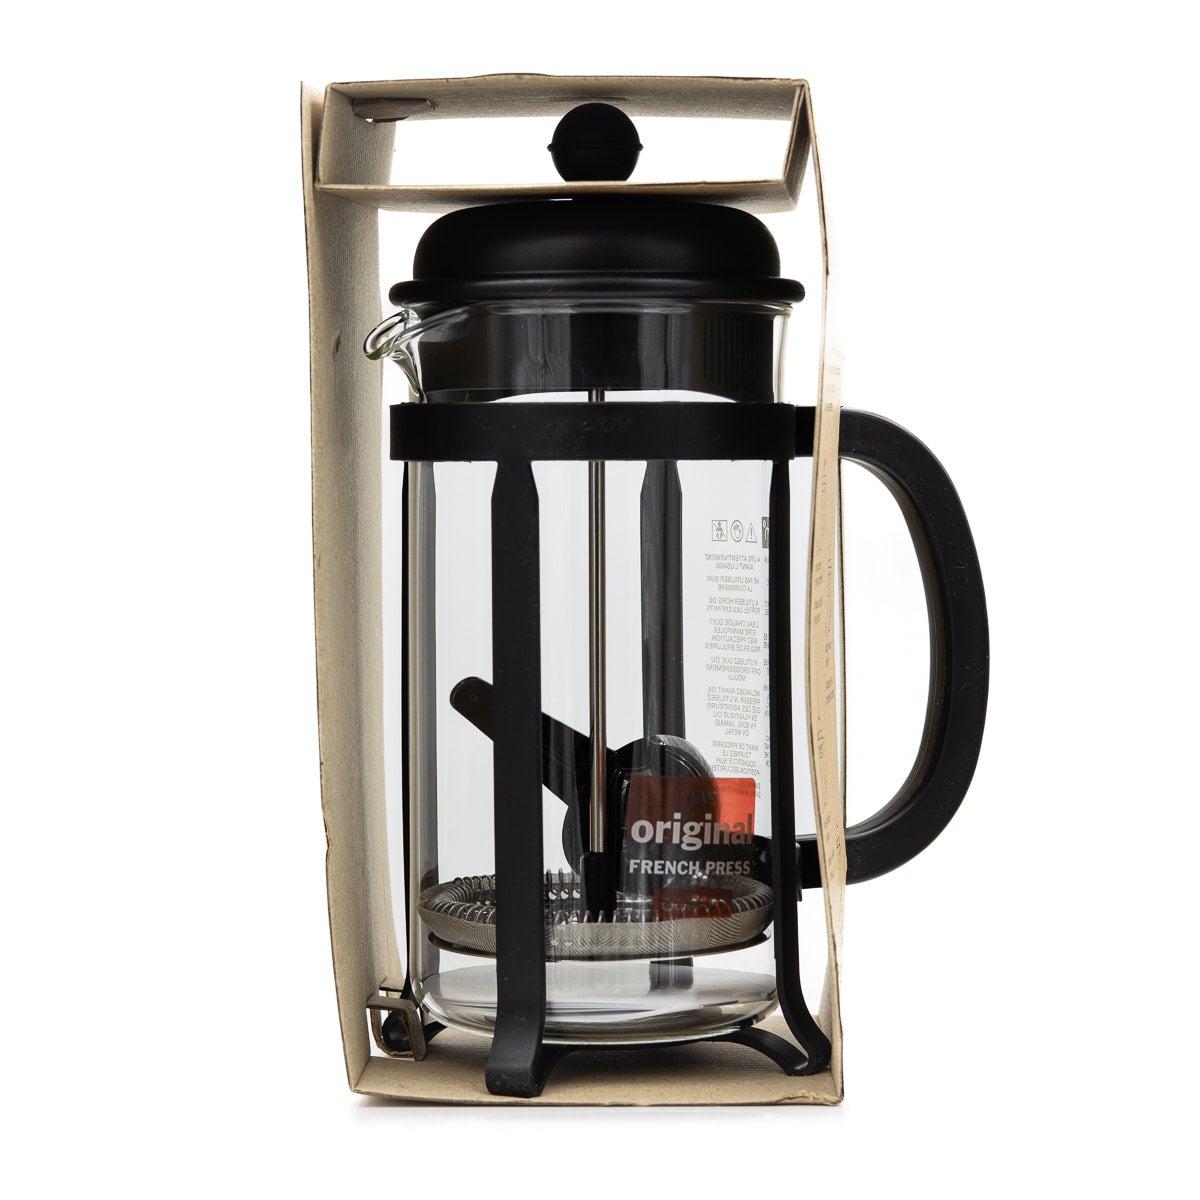 Bodum Java French Press Coffee Maker, 8 cup, 34 oz